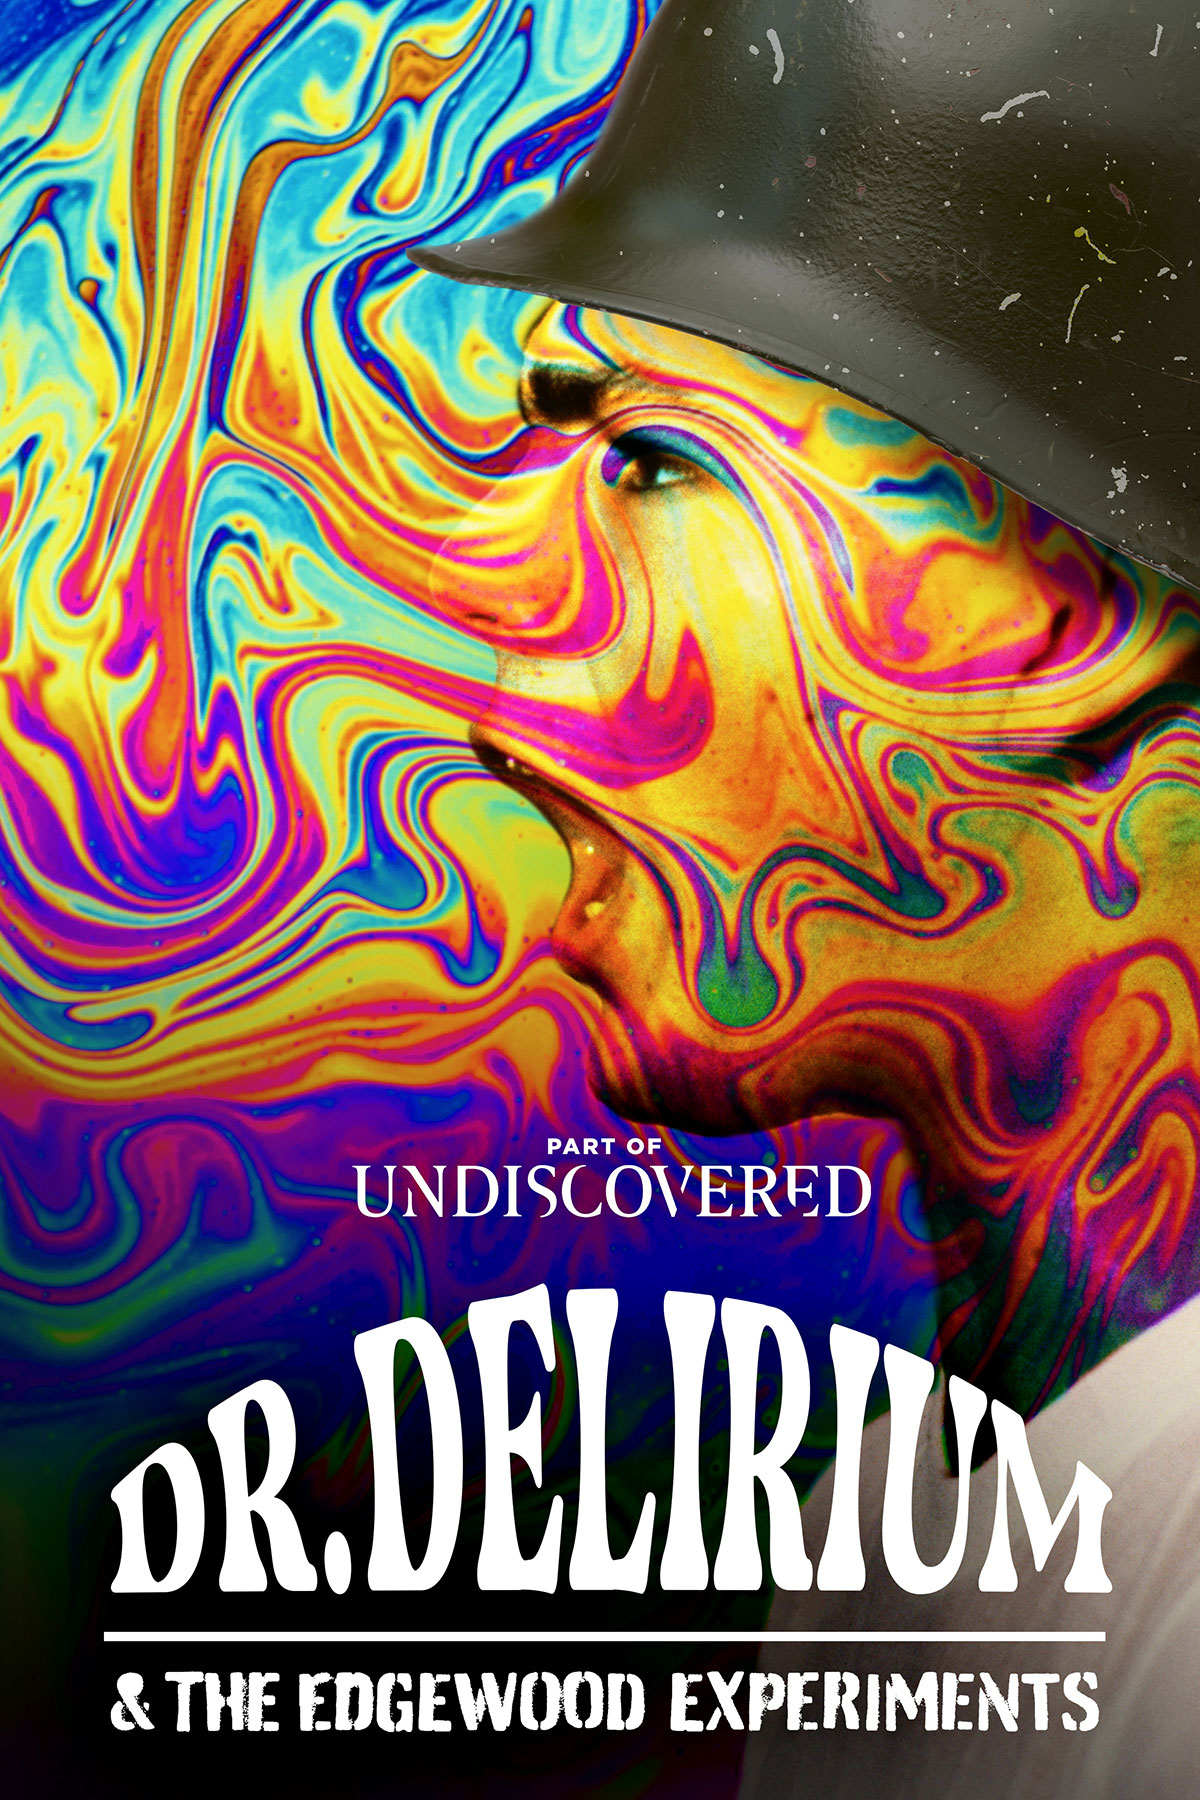 Photo of Dr. Delirium & The Edgewood Experiments